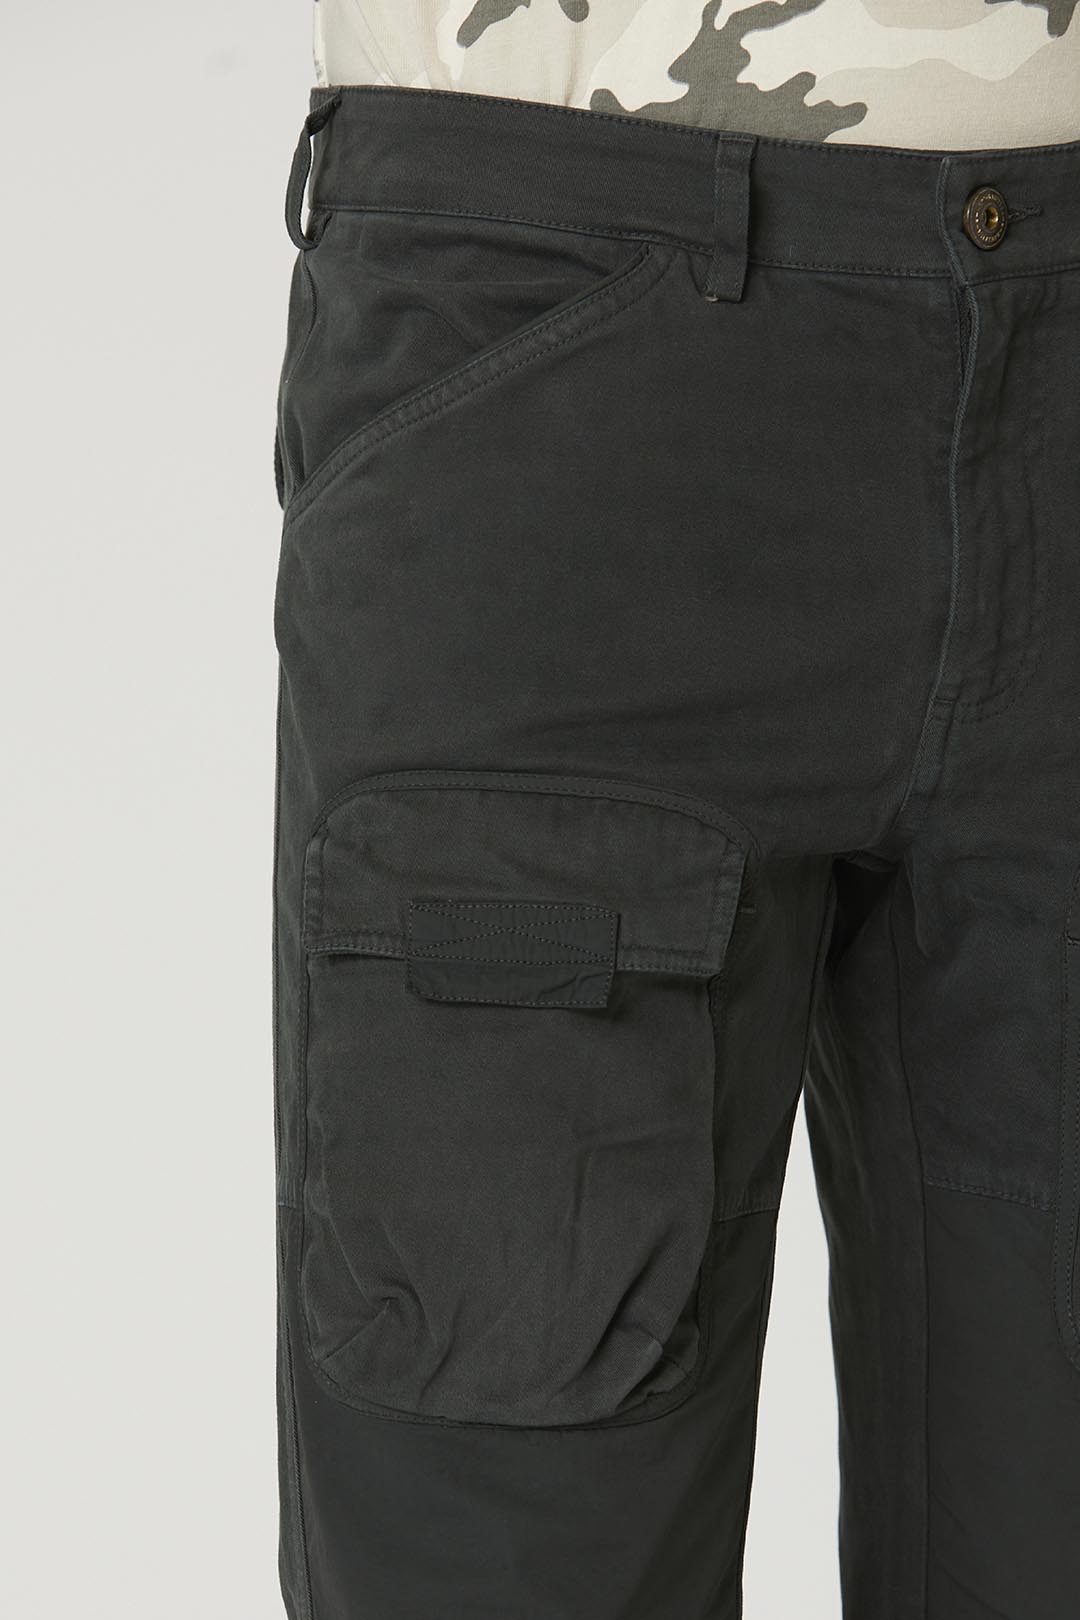 detail Kalhoty pantalone tasconato 232PA1559CT3167